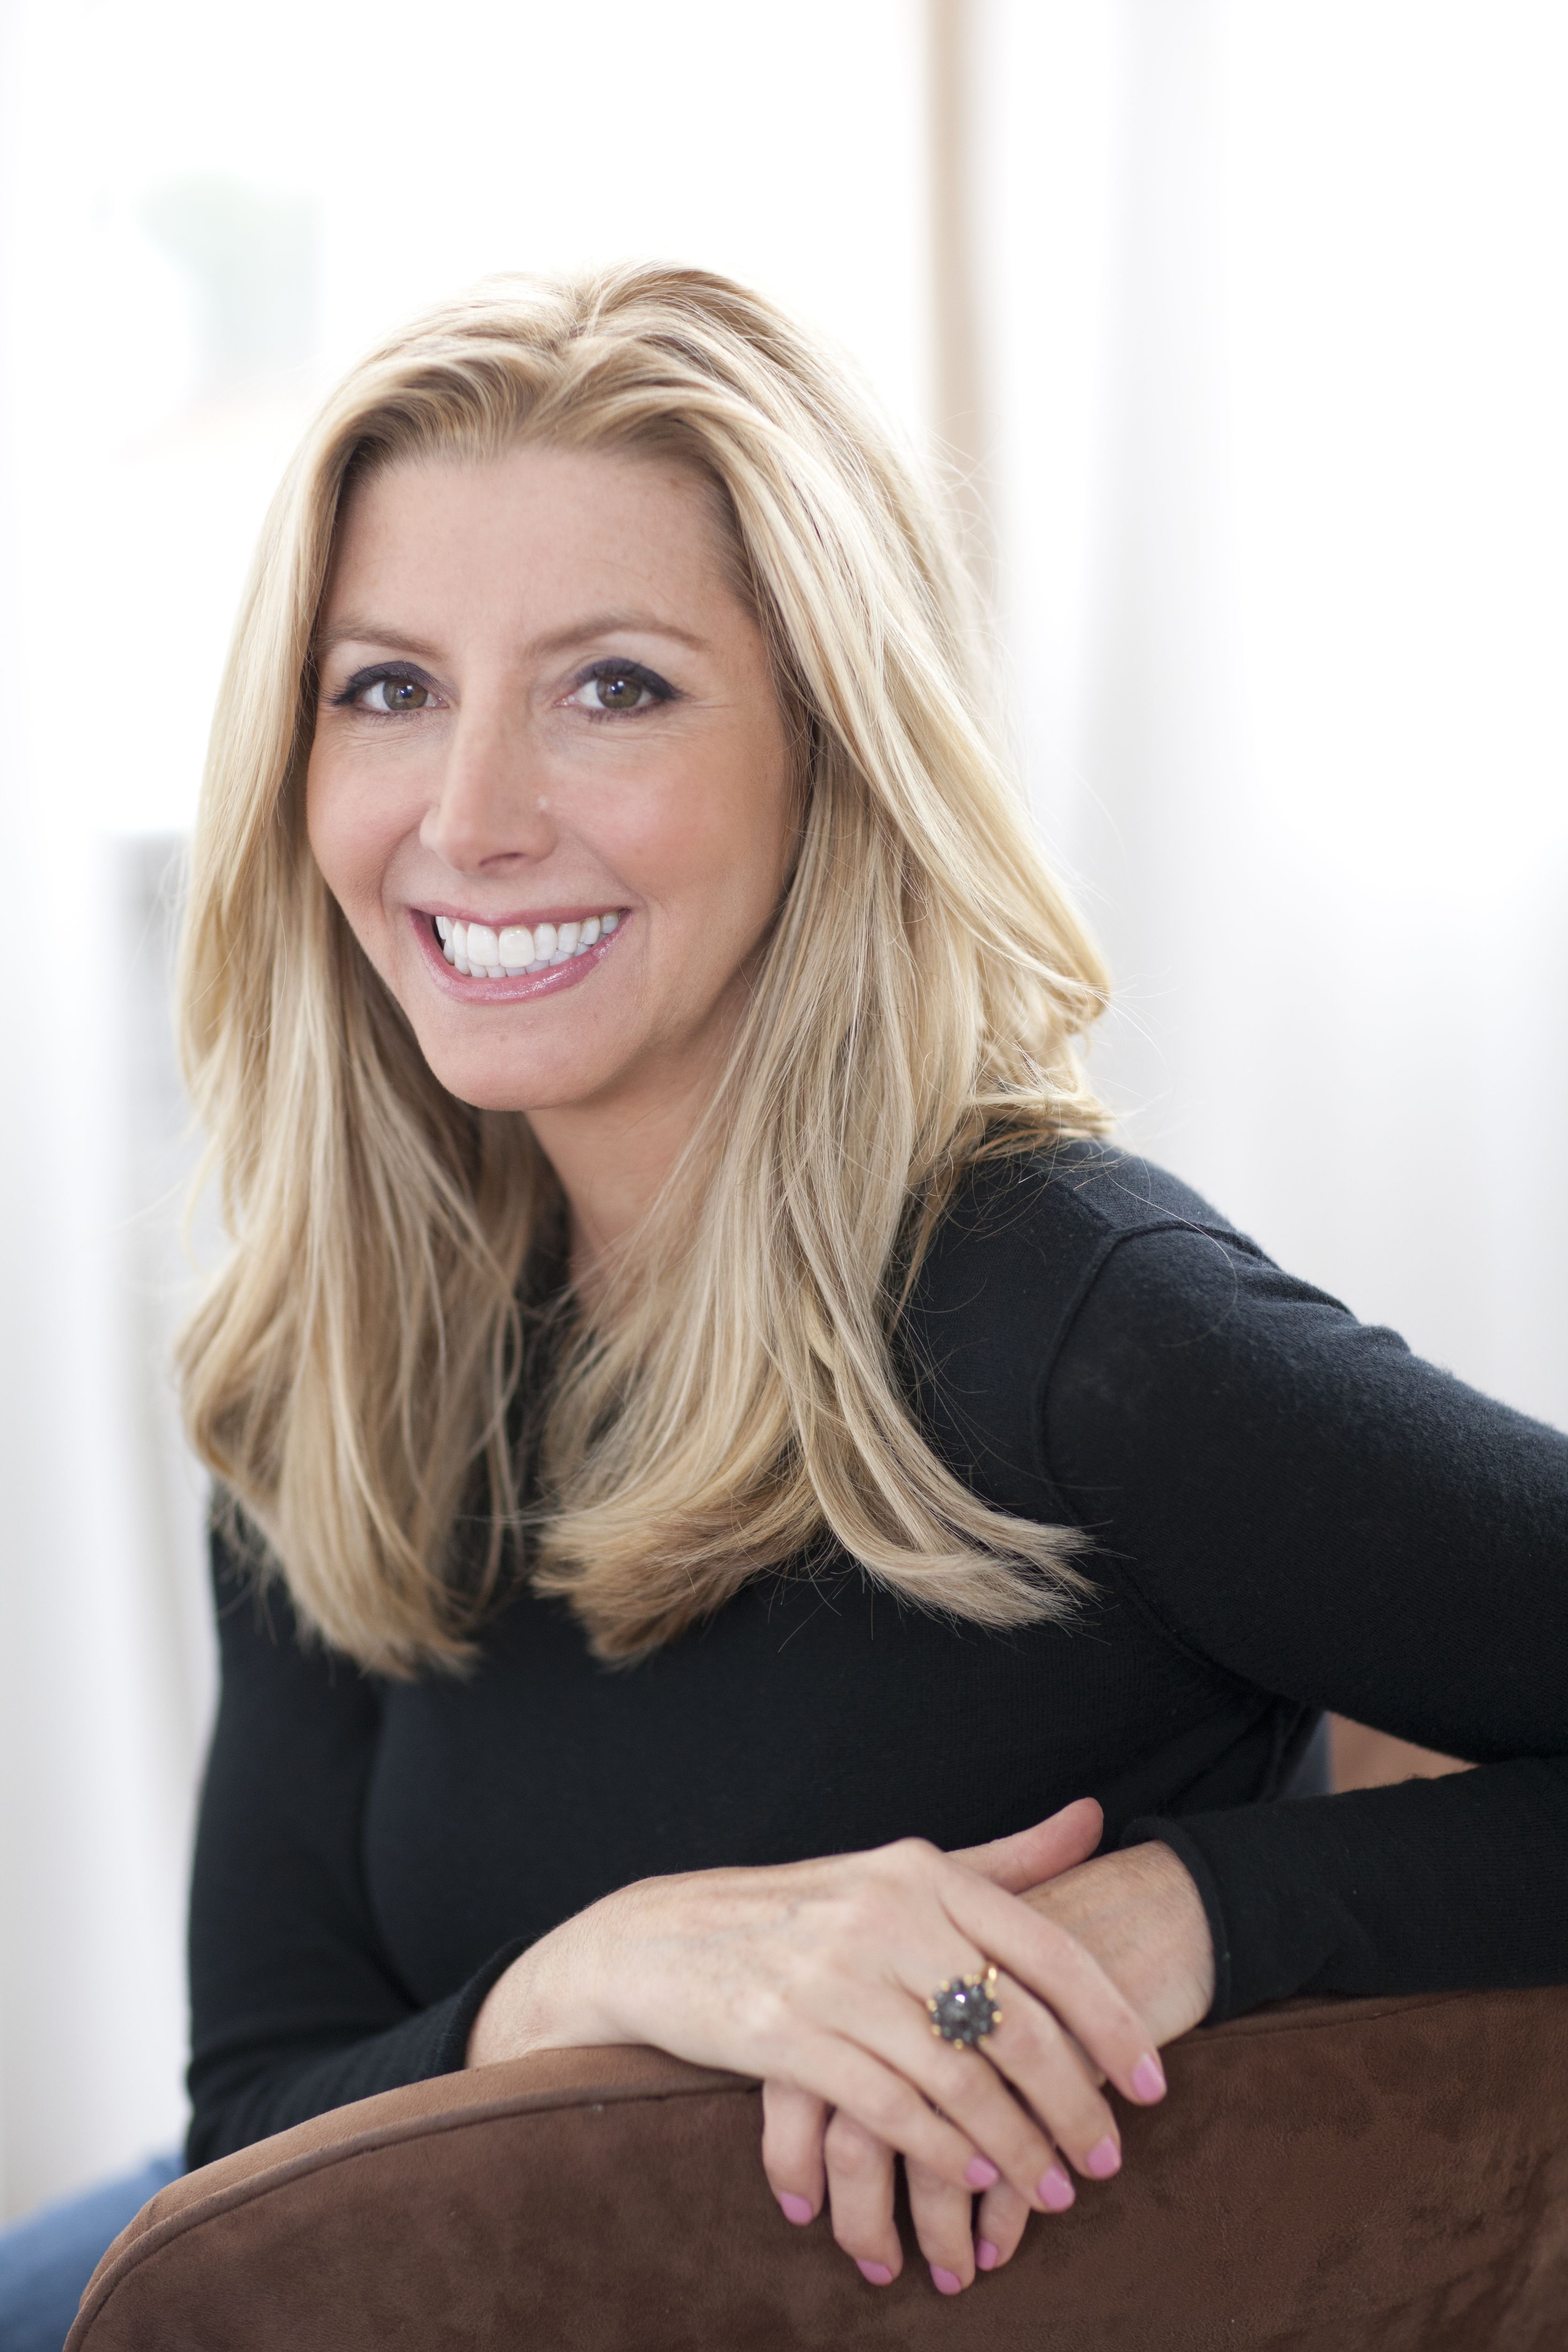 Spanx Founder Sara Blakely's 5 Keys To Building Lifelong Success - Inman